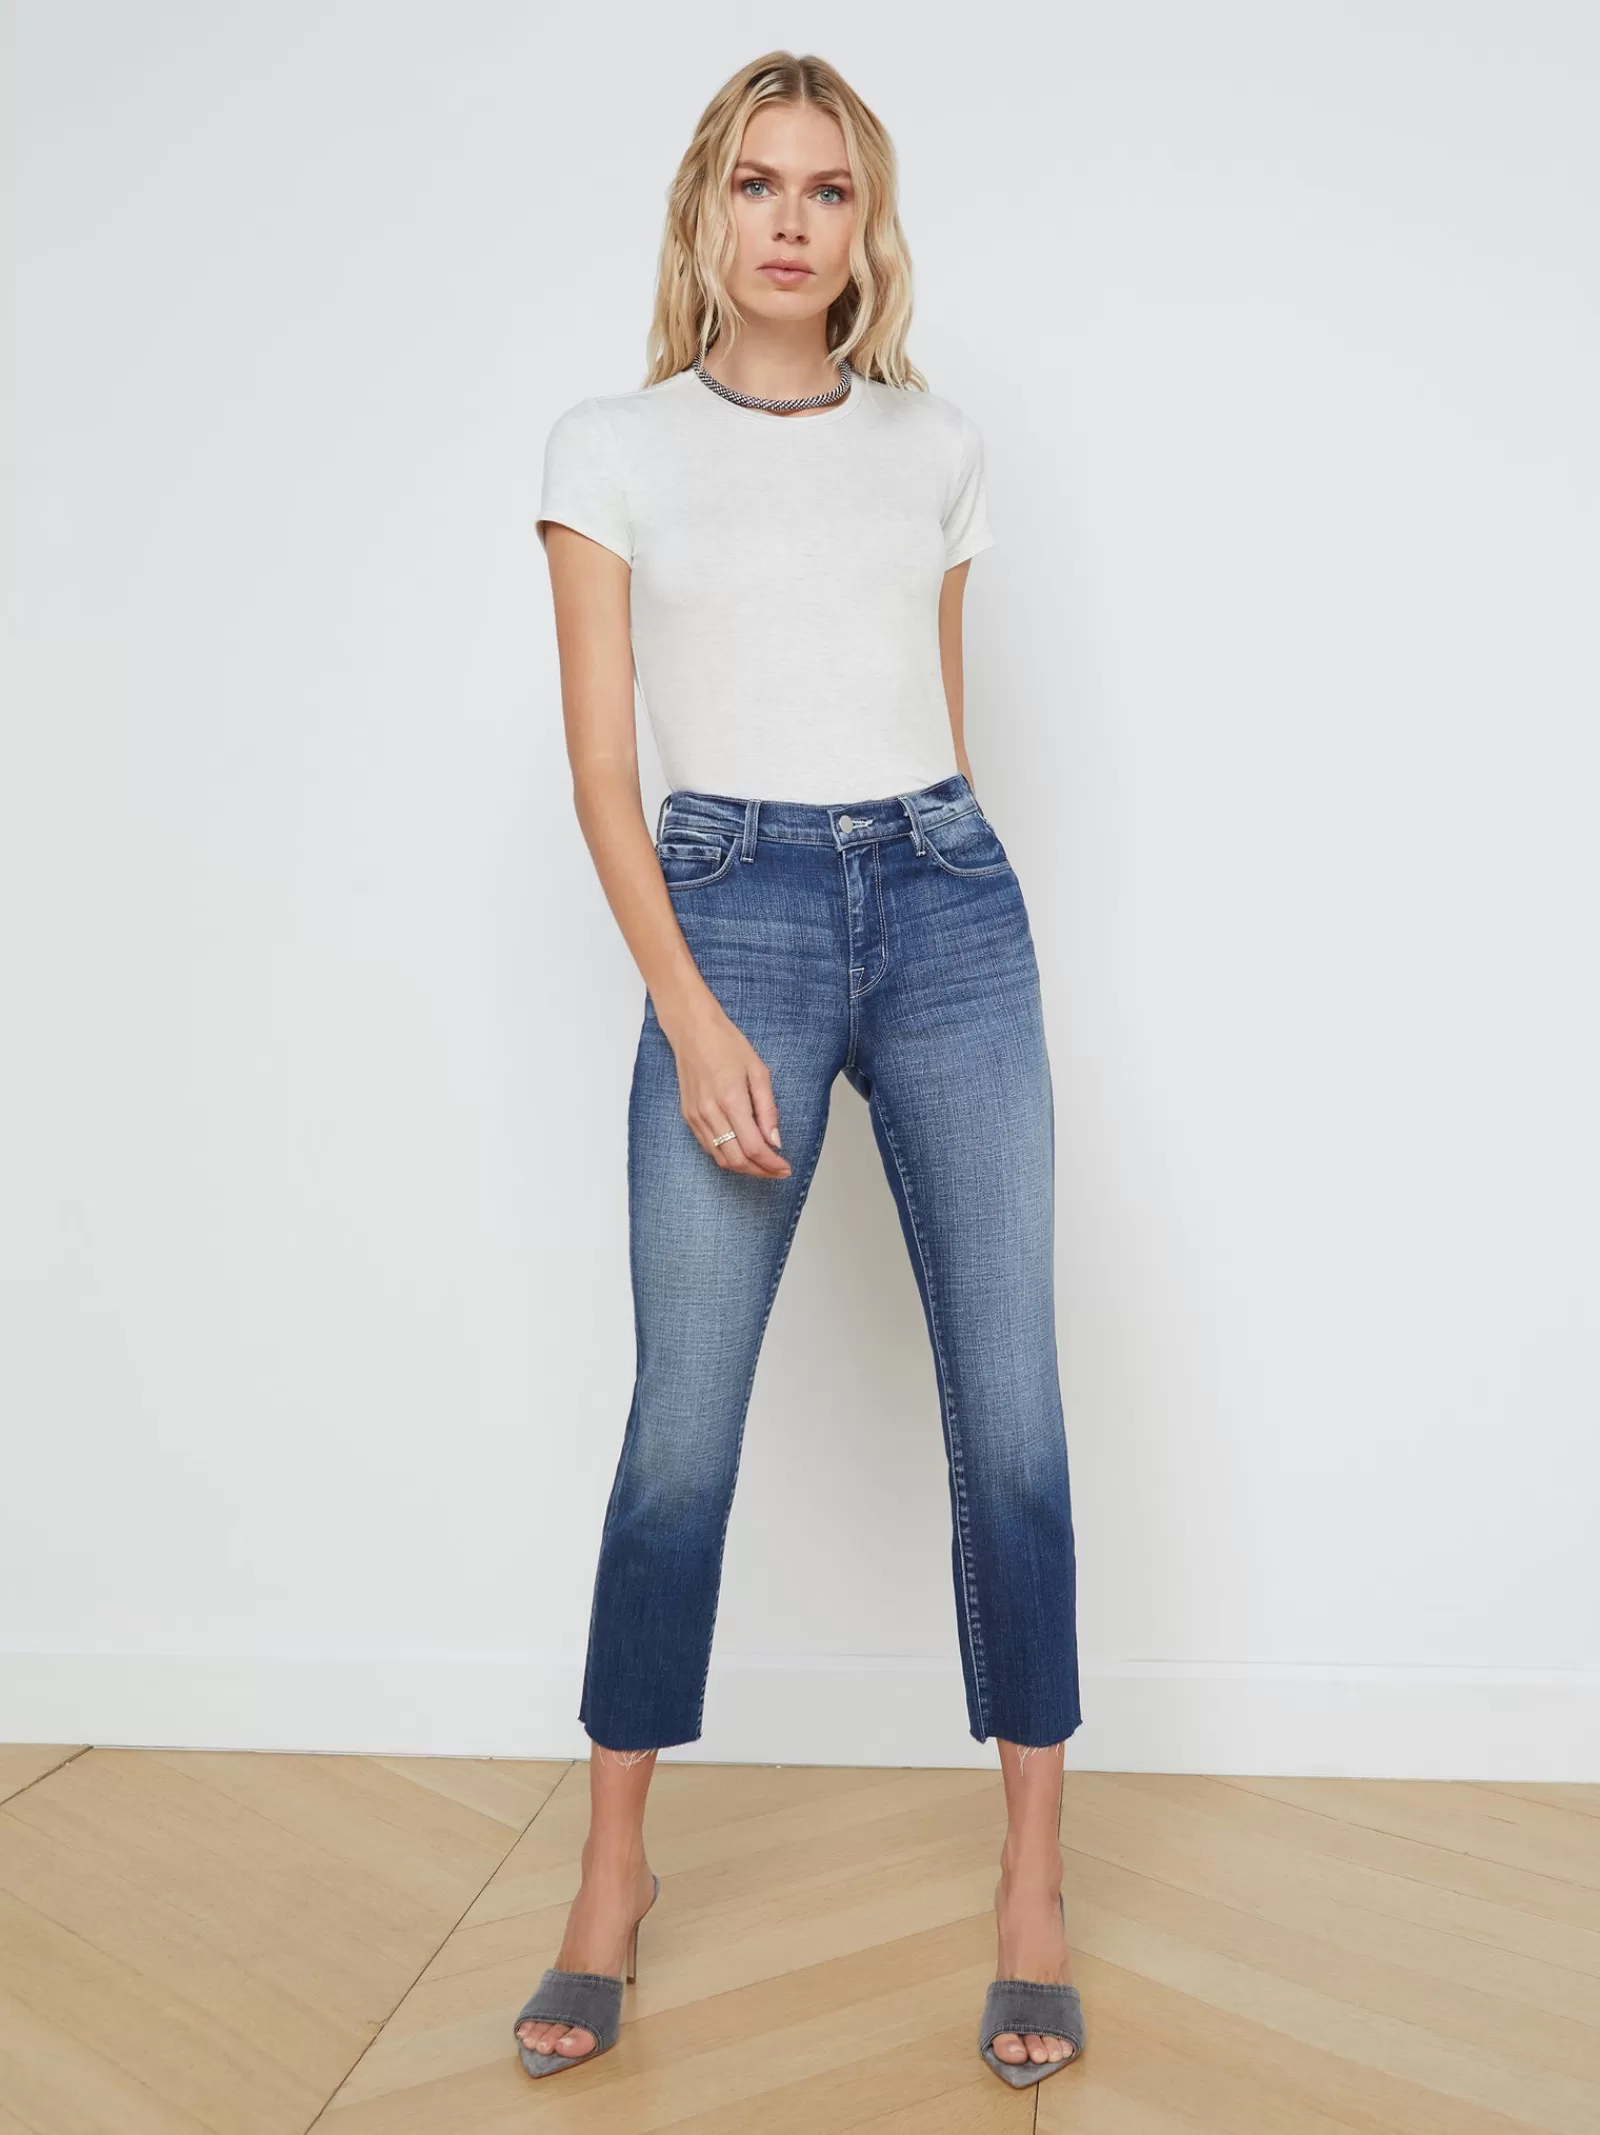 L'AGENCE Sada Slim-Leg Cropped Jean< Resort Collection | Petite